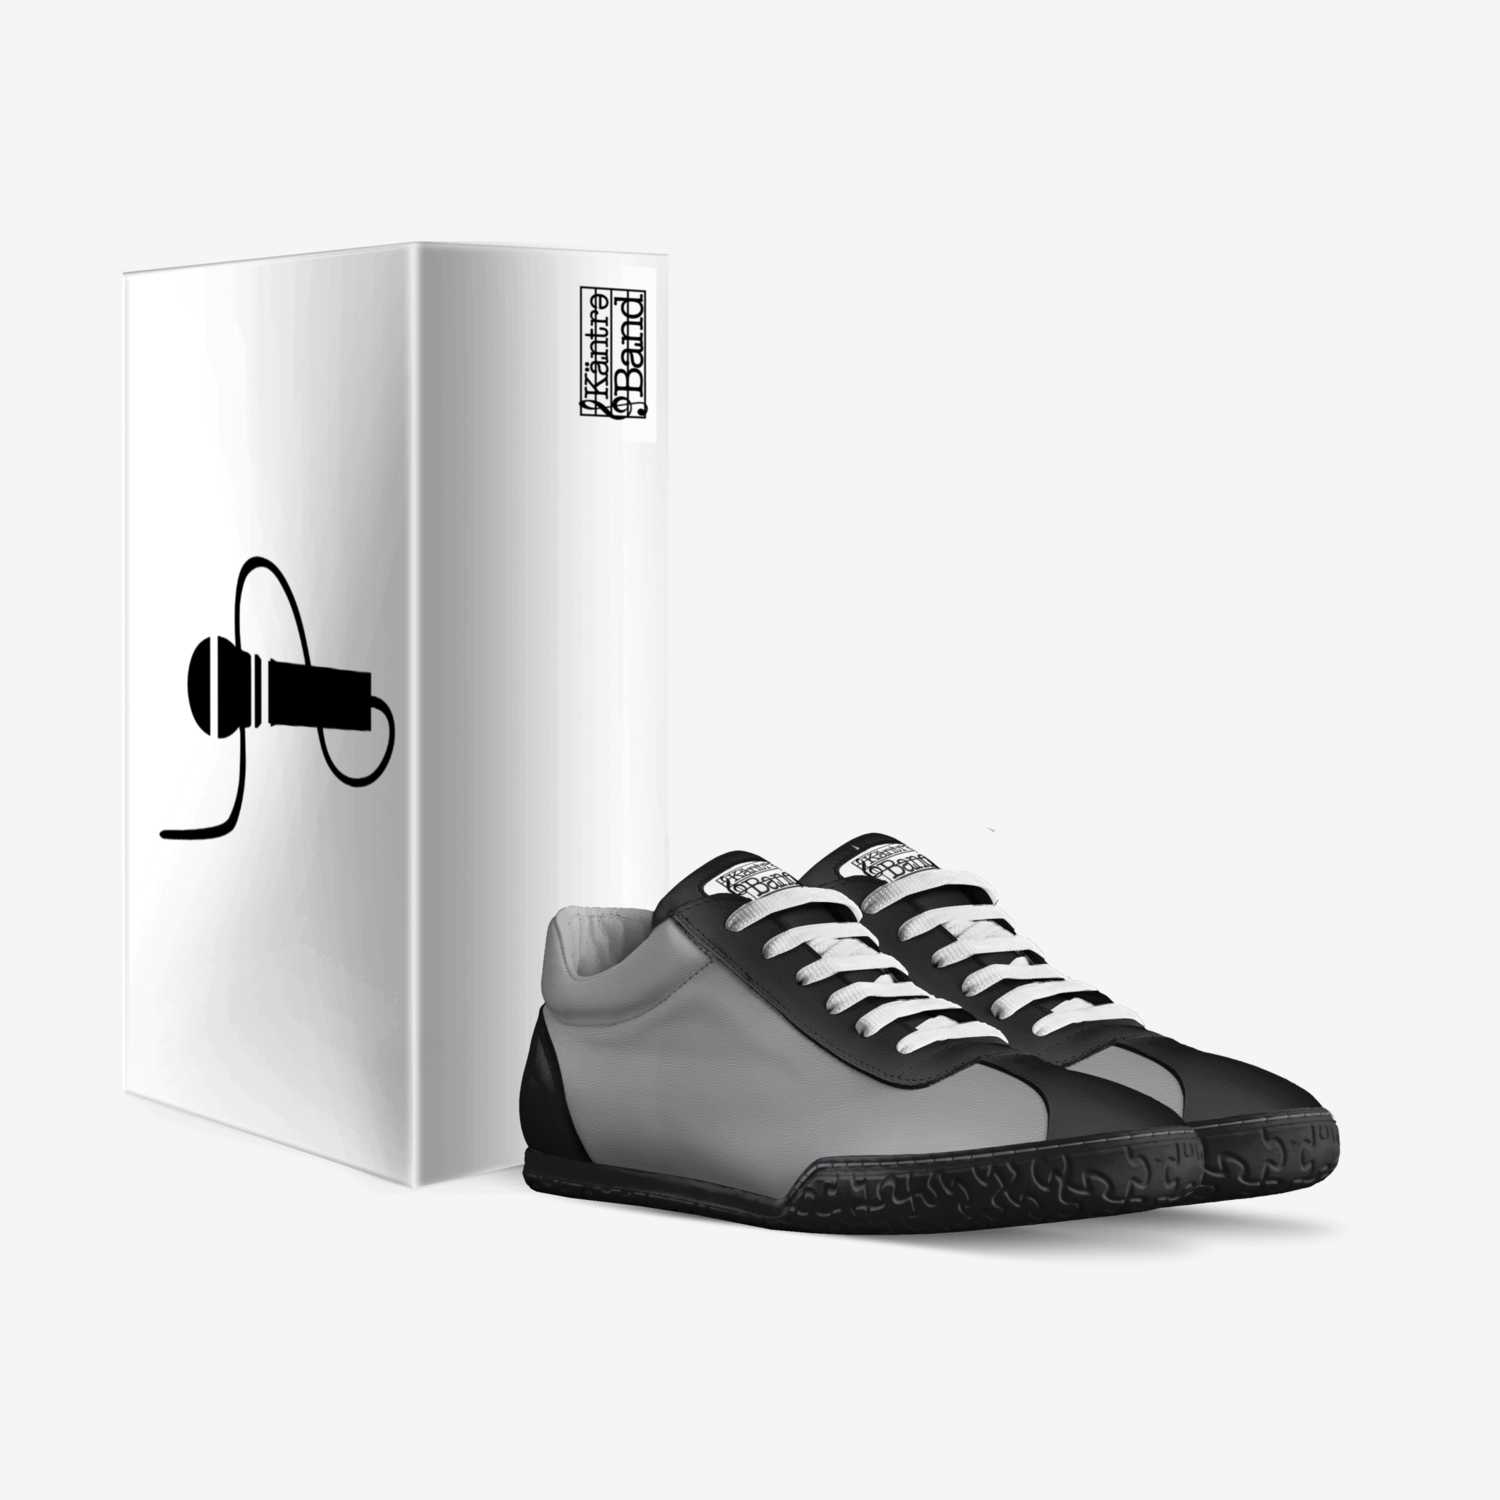 Kantre Kicks custom made in Italy shoes by Ryan Hart | Box view